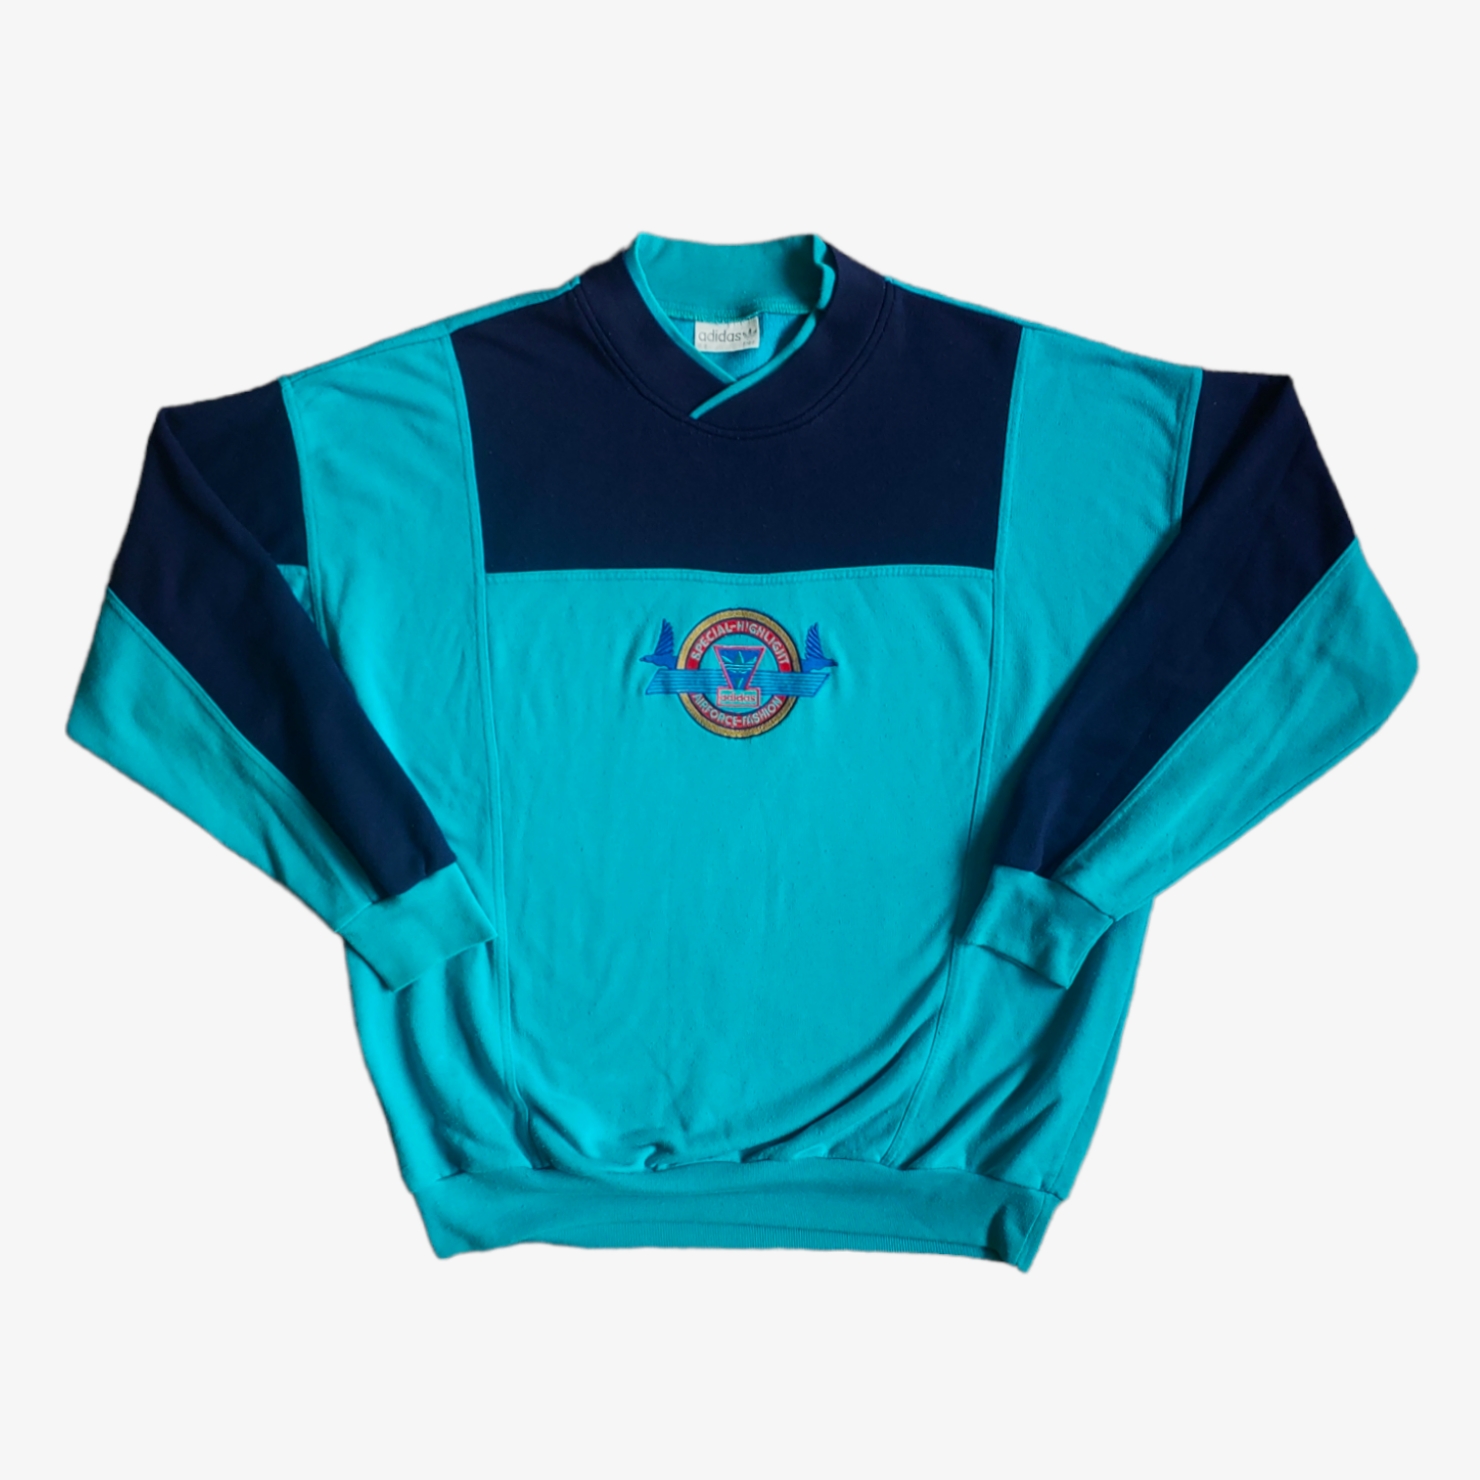 Vintage 90s Adidas 1994 Air Force Crewneck Sweatshirt - Casspios Dream